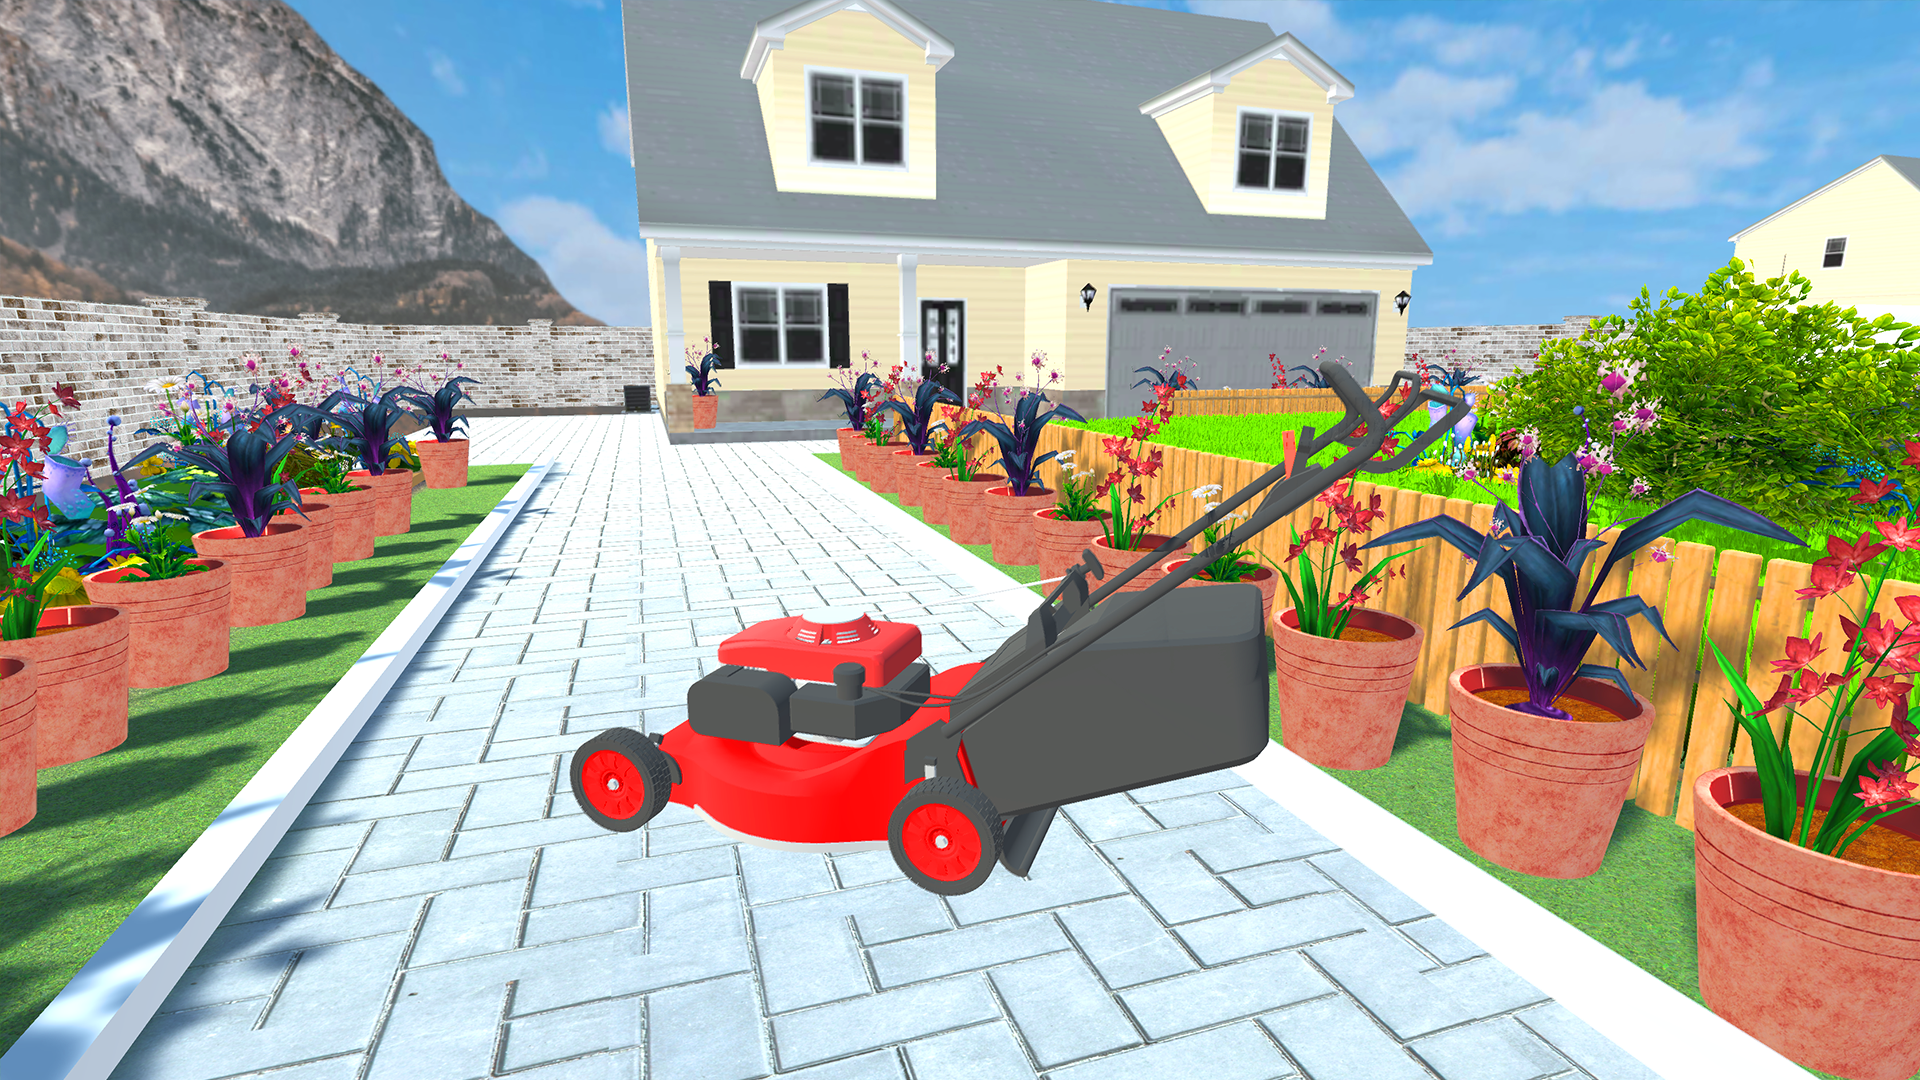 Screenshot of Lawn mowing simulation game